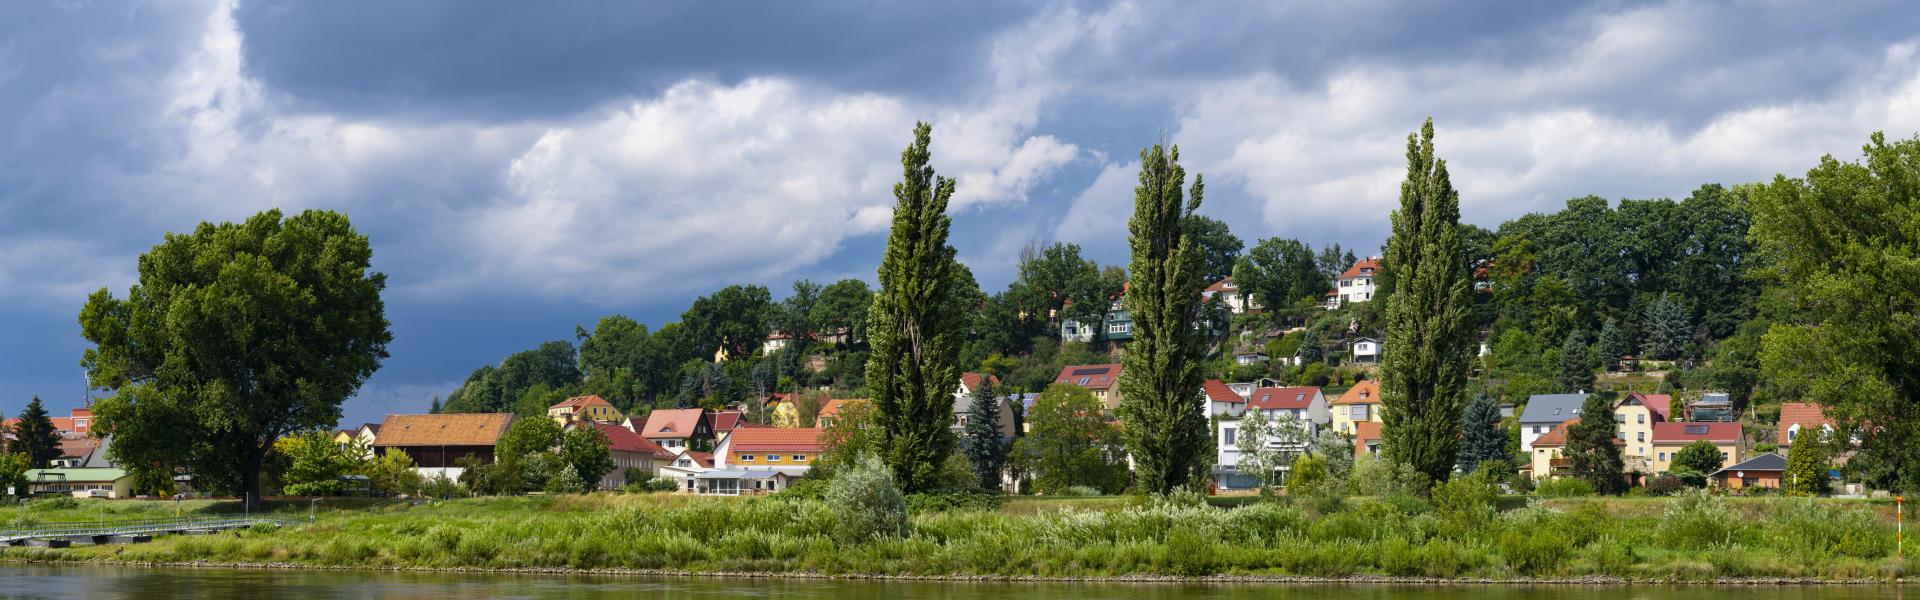 Pirna Scenic View